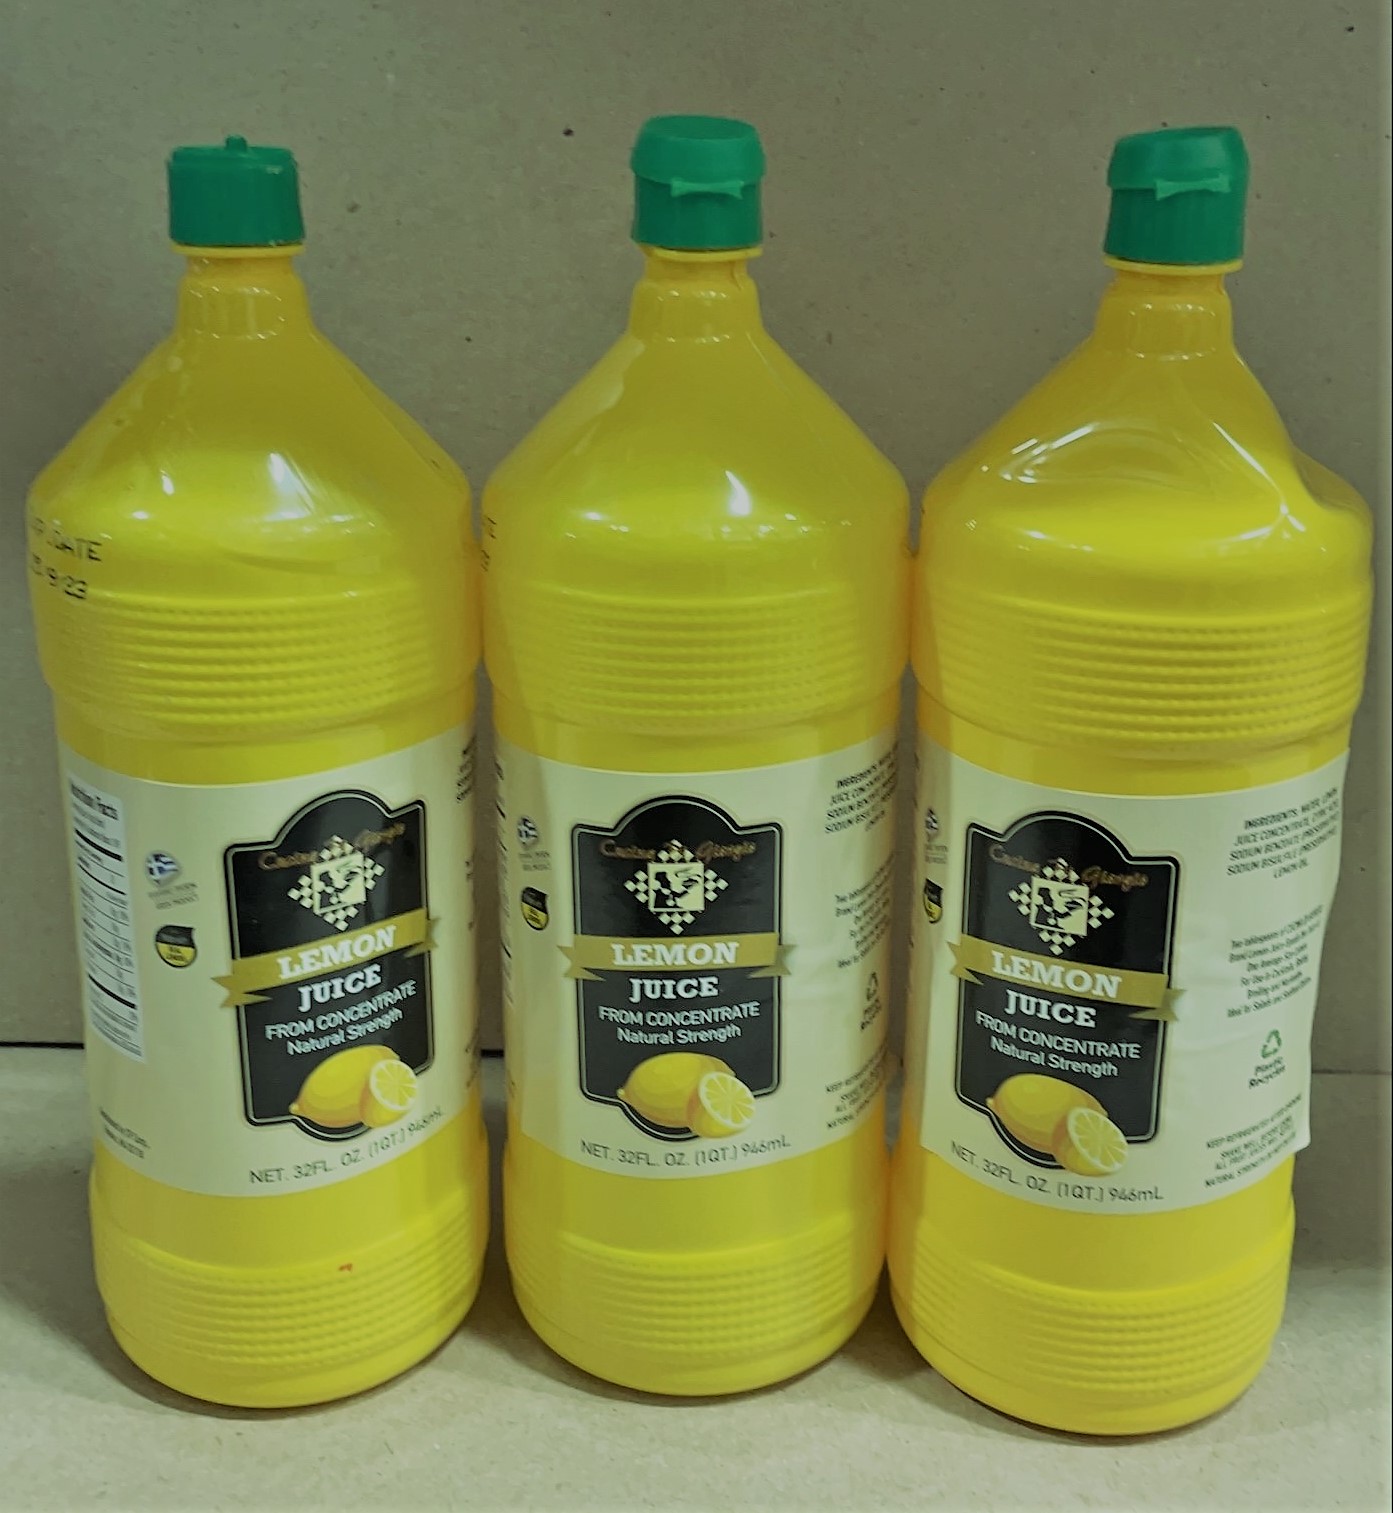 Sunfield - Lemon Juice 12/32 Bottles